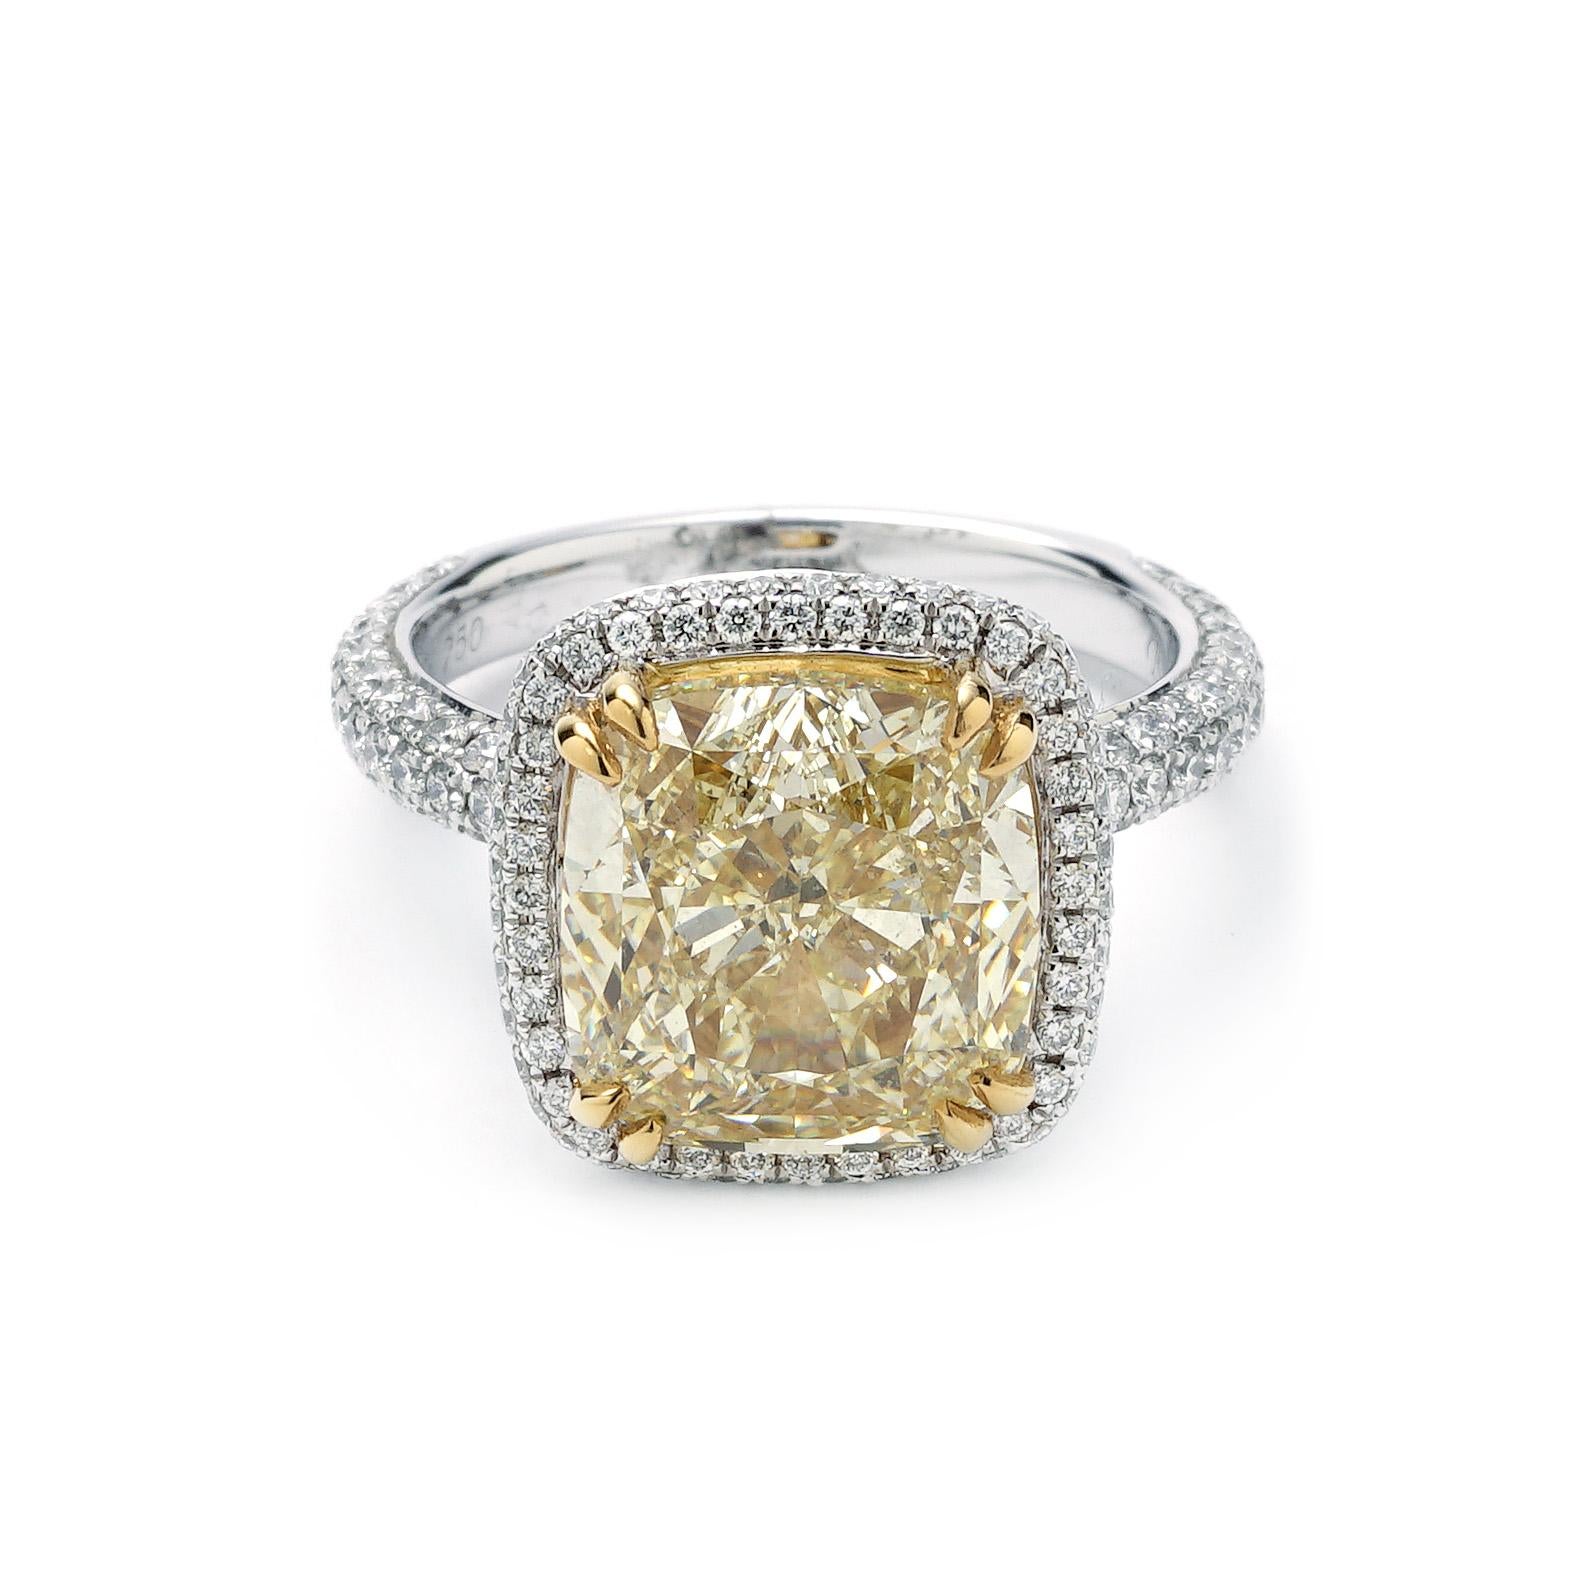 Cushion Cut GIA Certified 7.10 Carat Centre Fancy Yellow Diamond Ring in 18 Karat White Gold